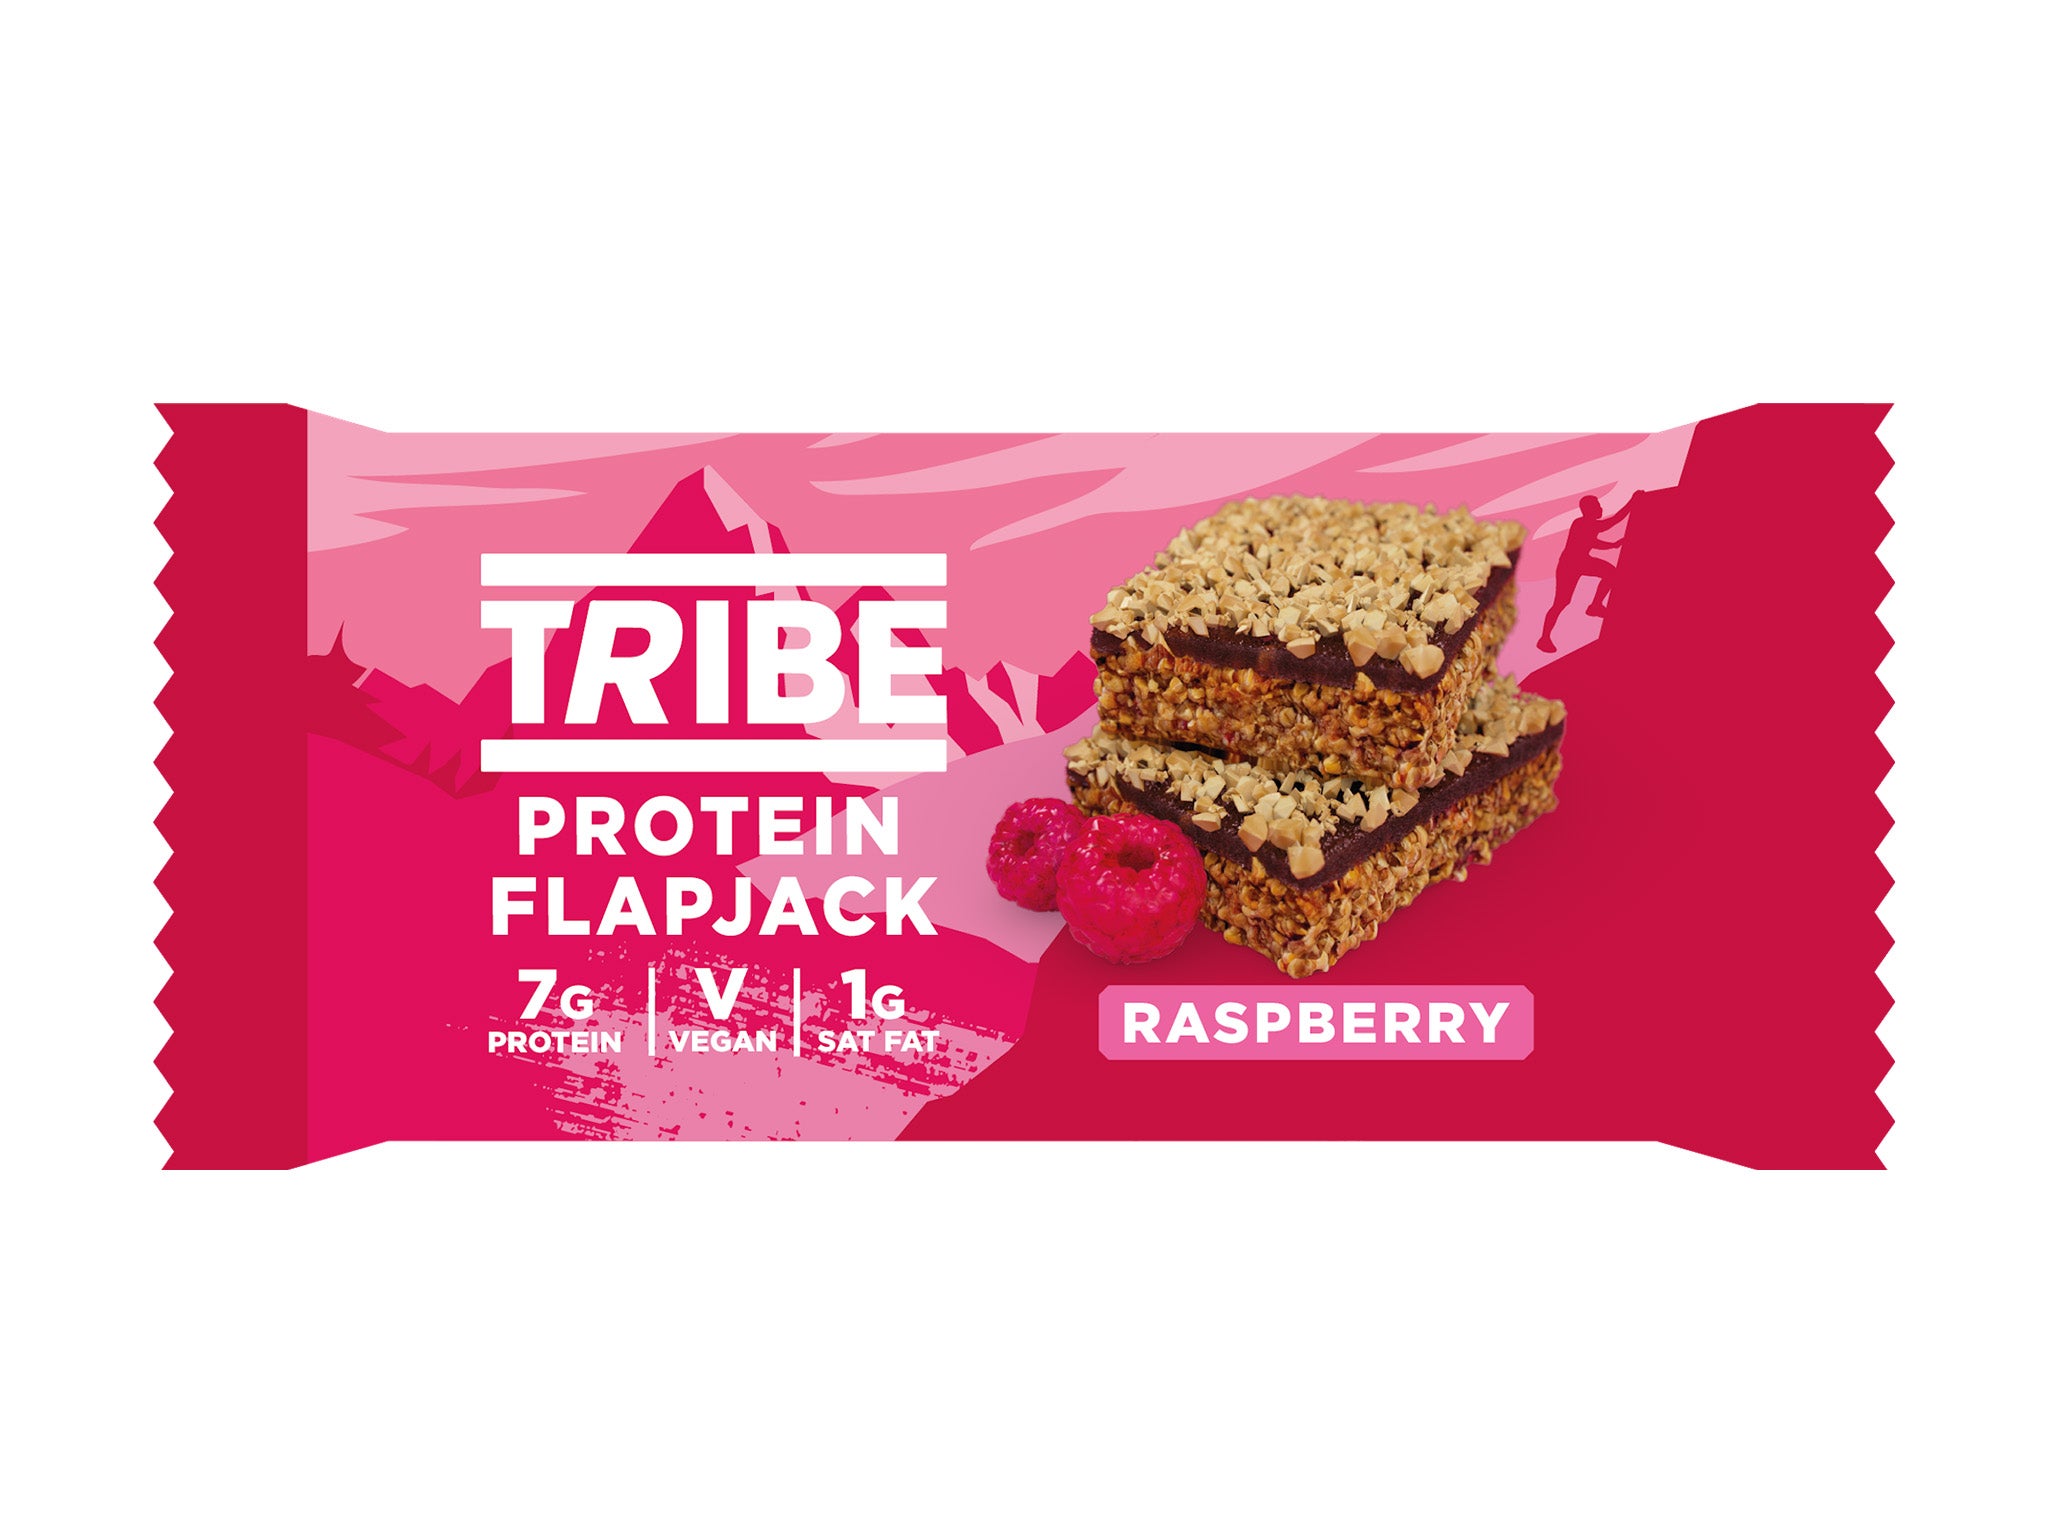 Tribe protein flapjack indybest.jpg